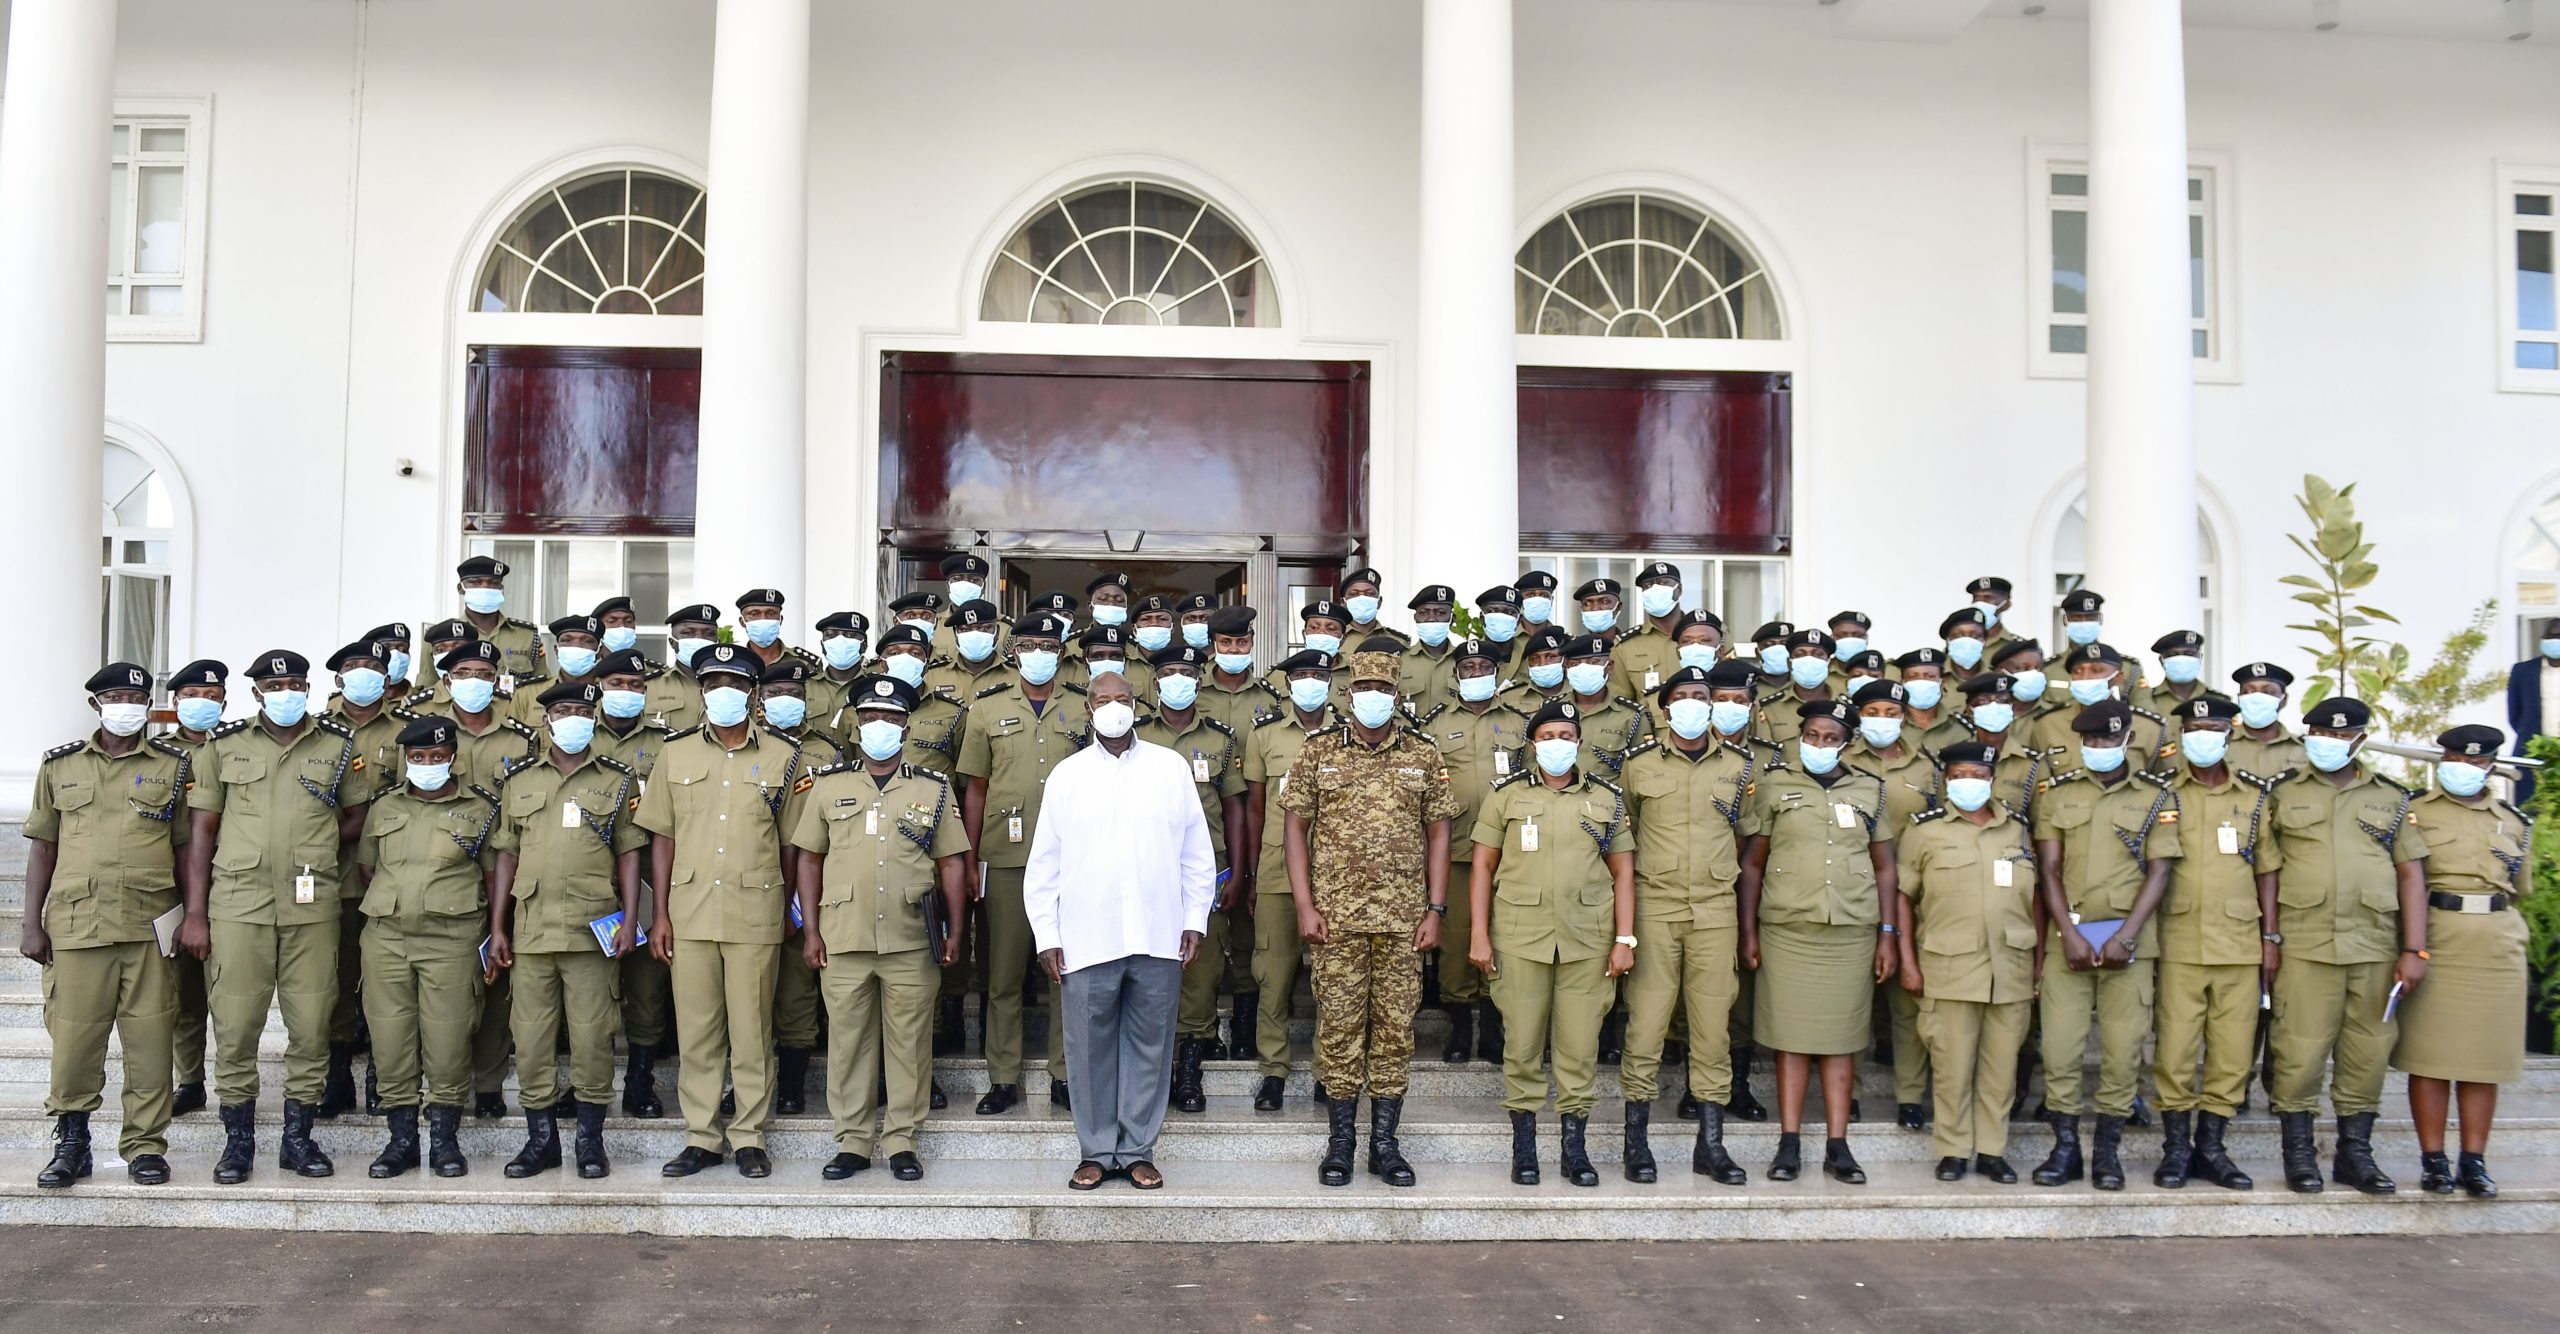 President Museveni Emphasizes Patriotism to CID Officers